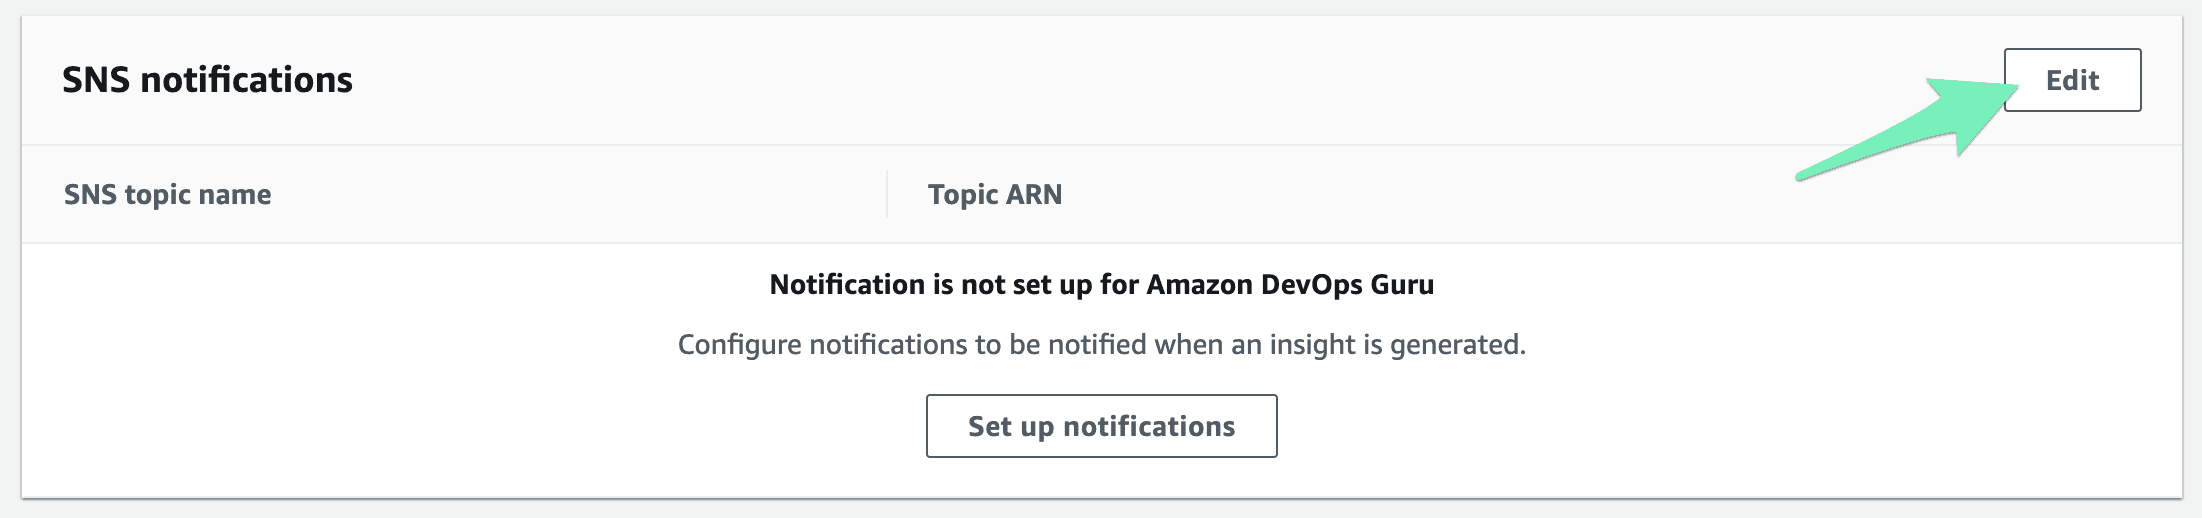 Amazon DevOps Guru Notification Setup: Step 1